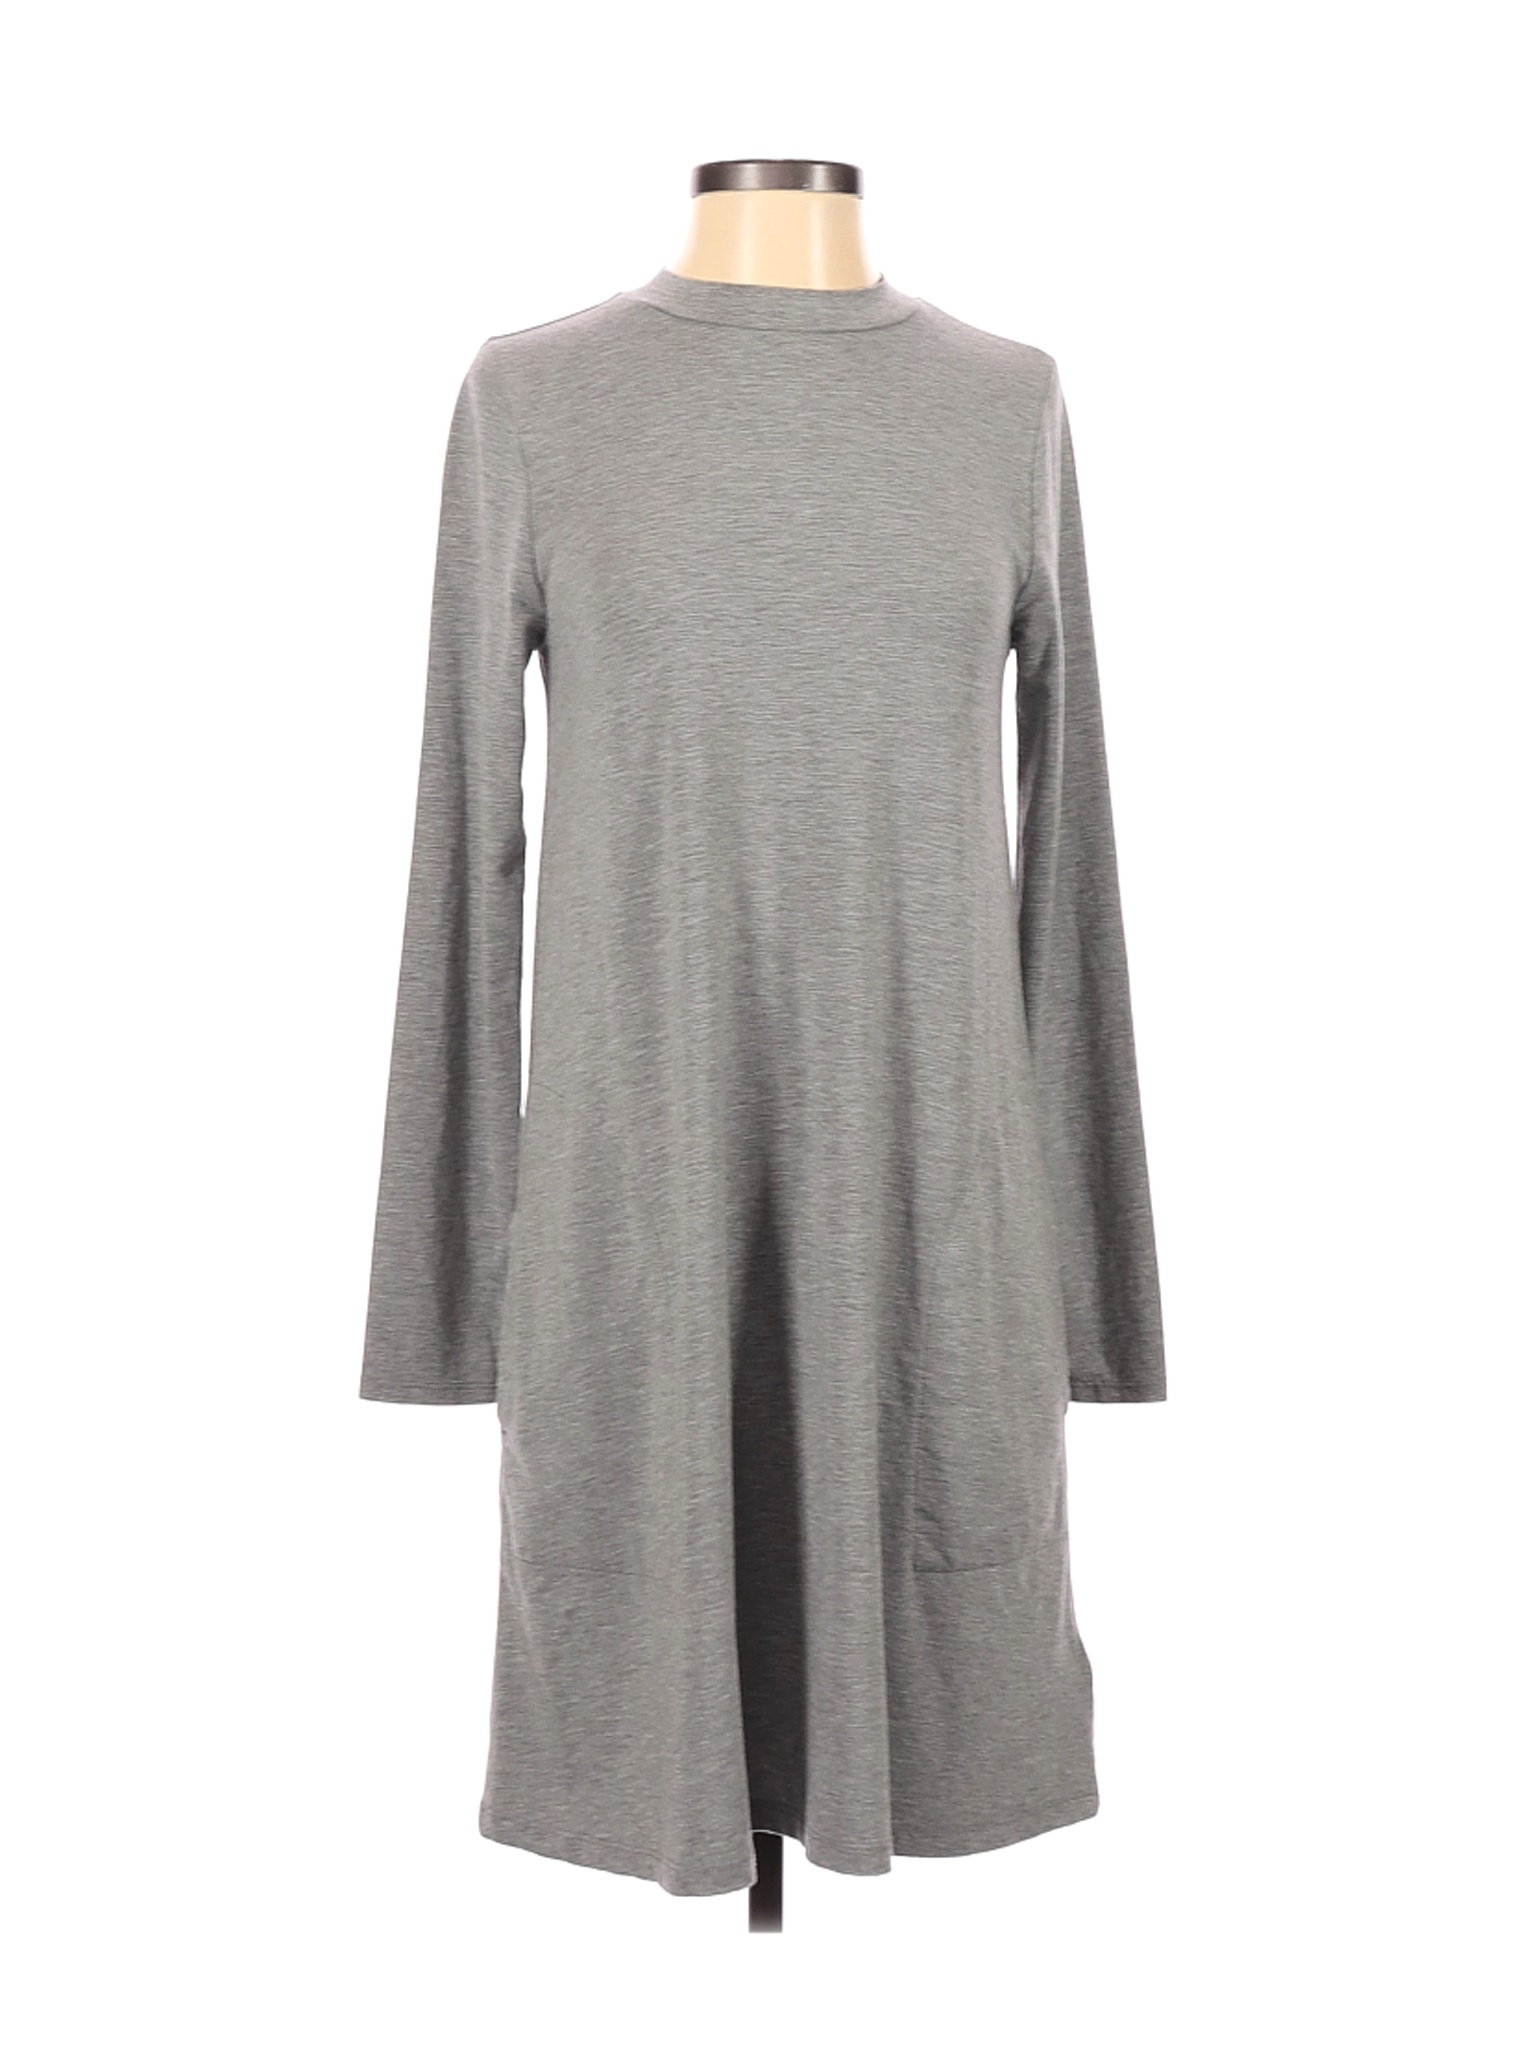 J.Crew Women Gray Casual Dress S | eBay